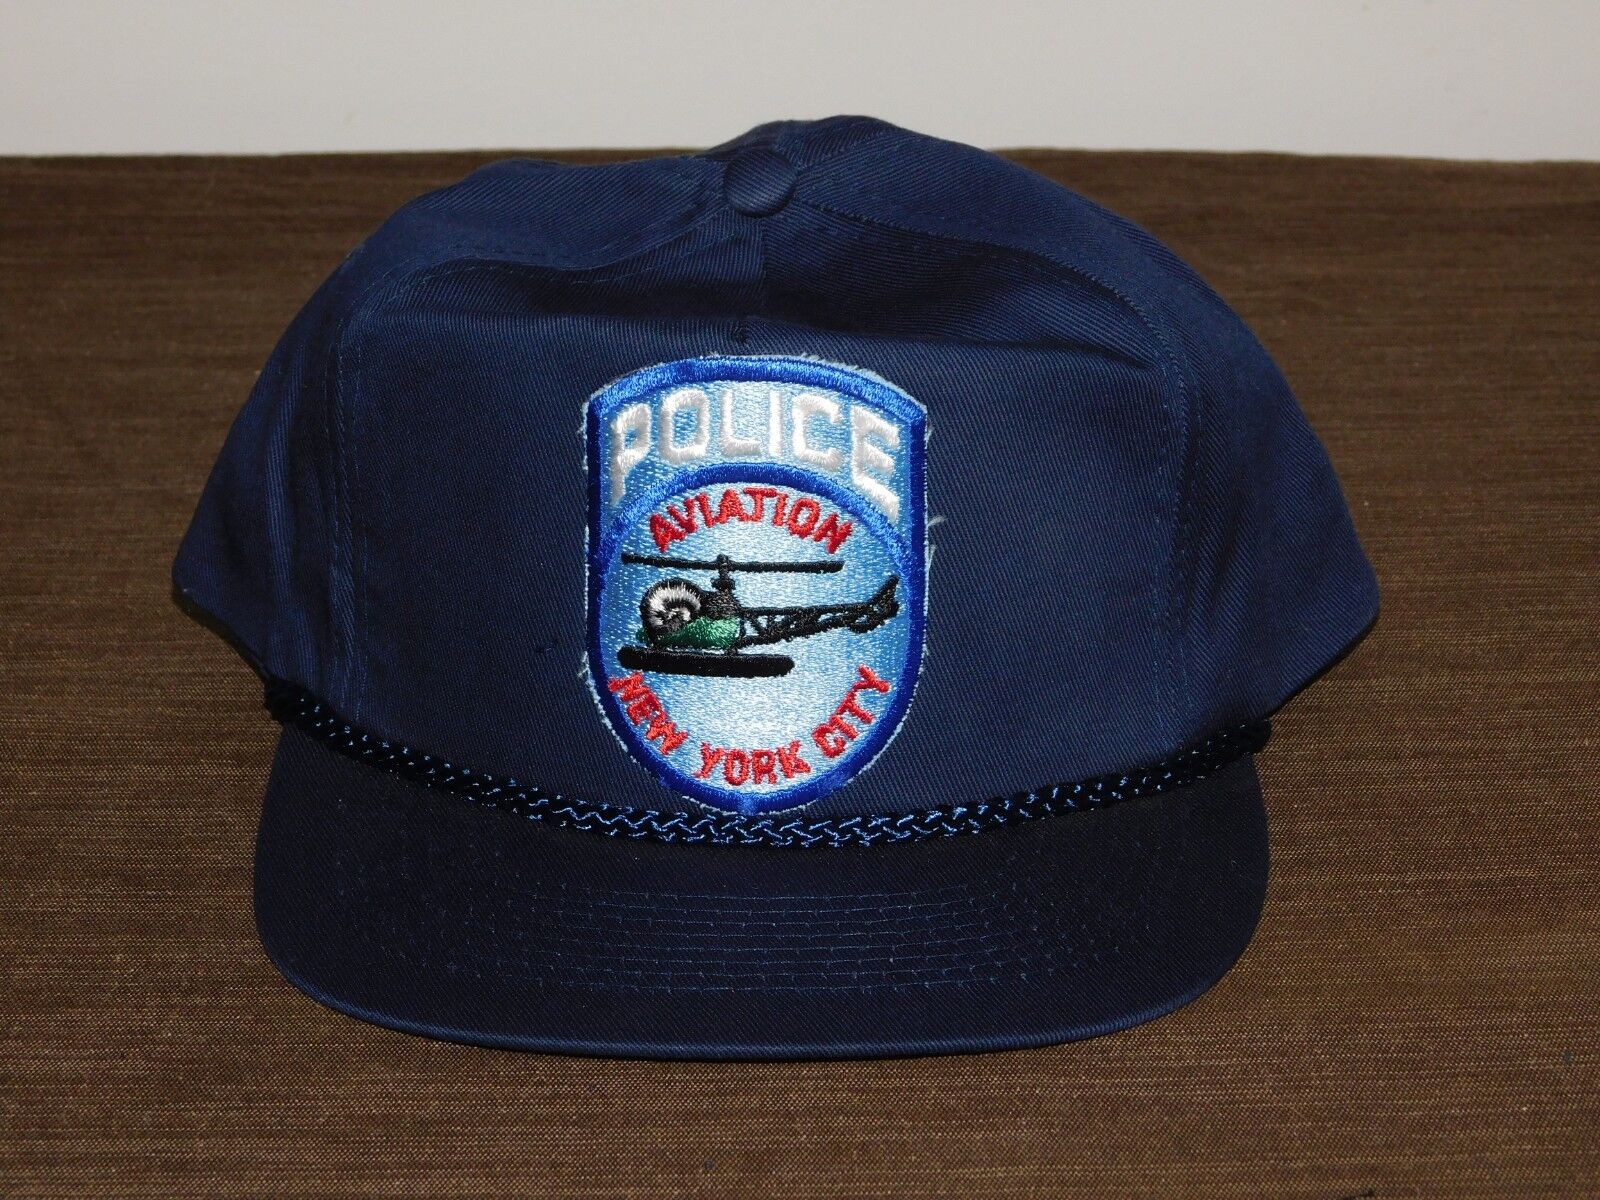  POLICE BASEBALL CAP HAT NEW YORK CITY POLICE AVIATION NYPD NEW UNUSED